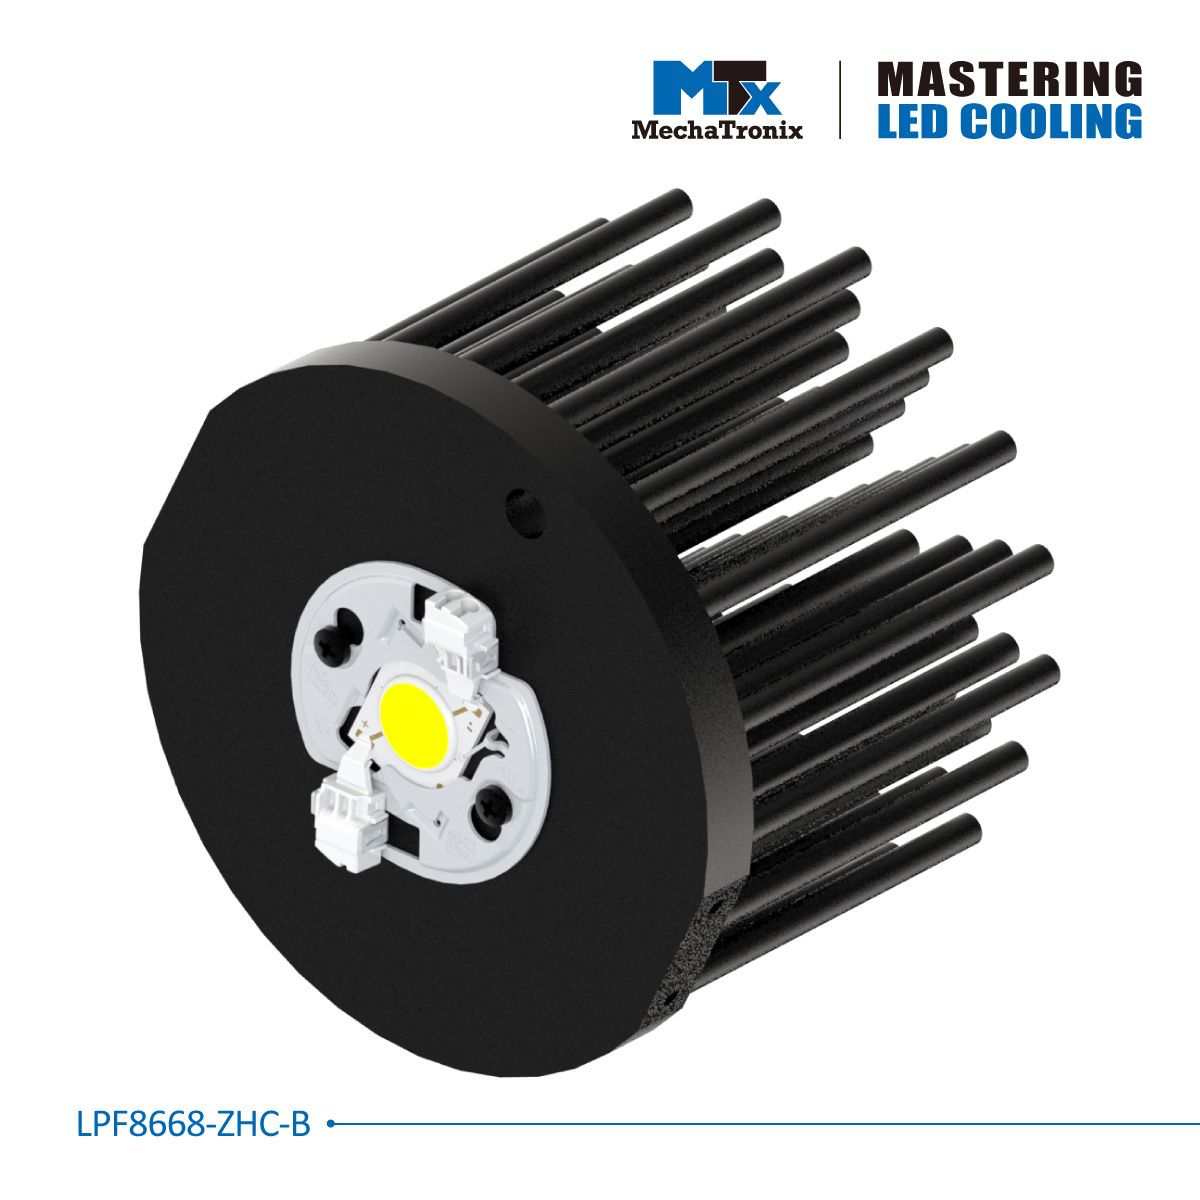 MechaTronix Heat Sink LPF11180-ZHE-B for LED <9600lm